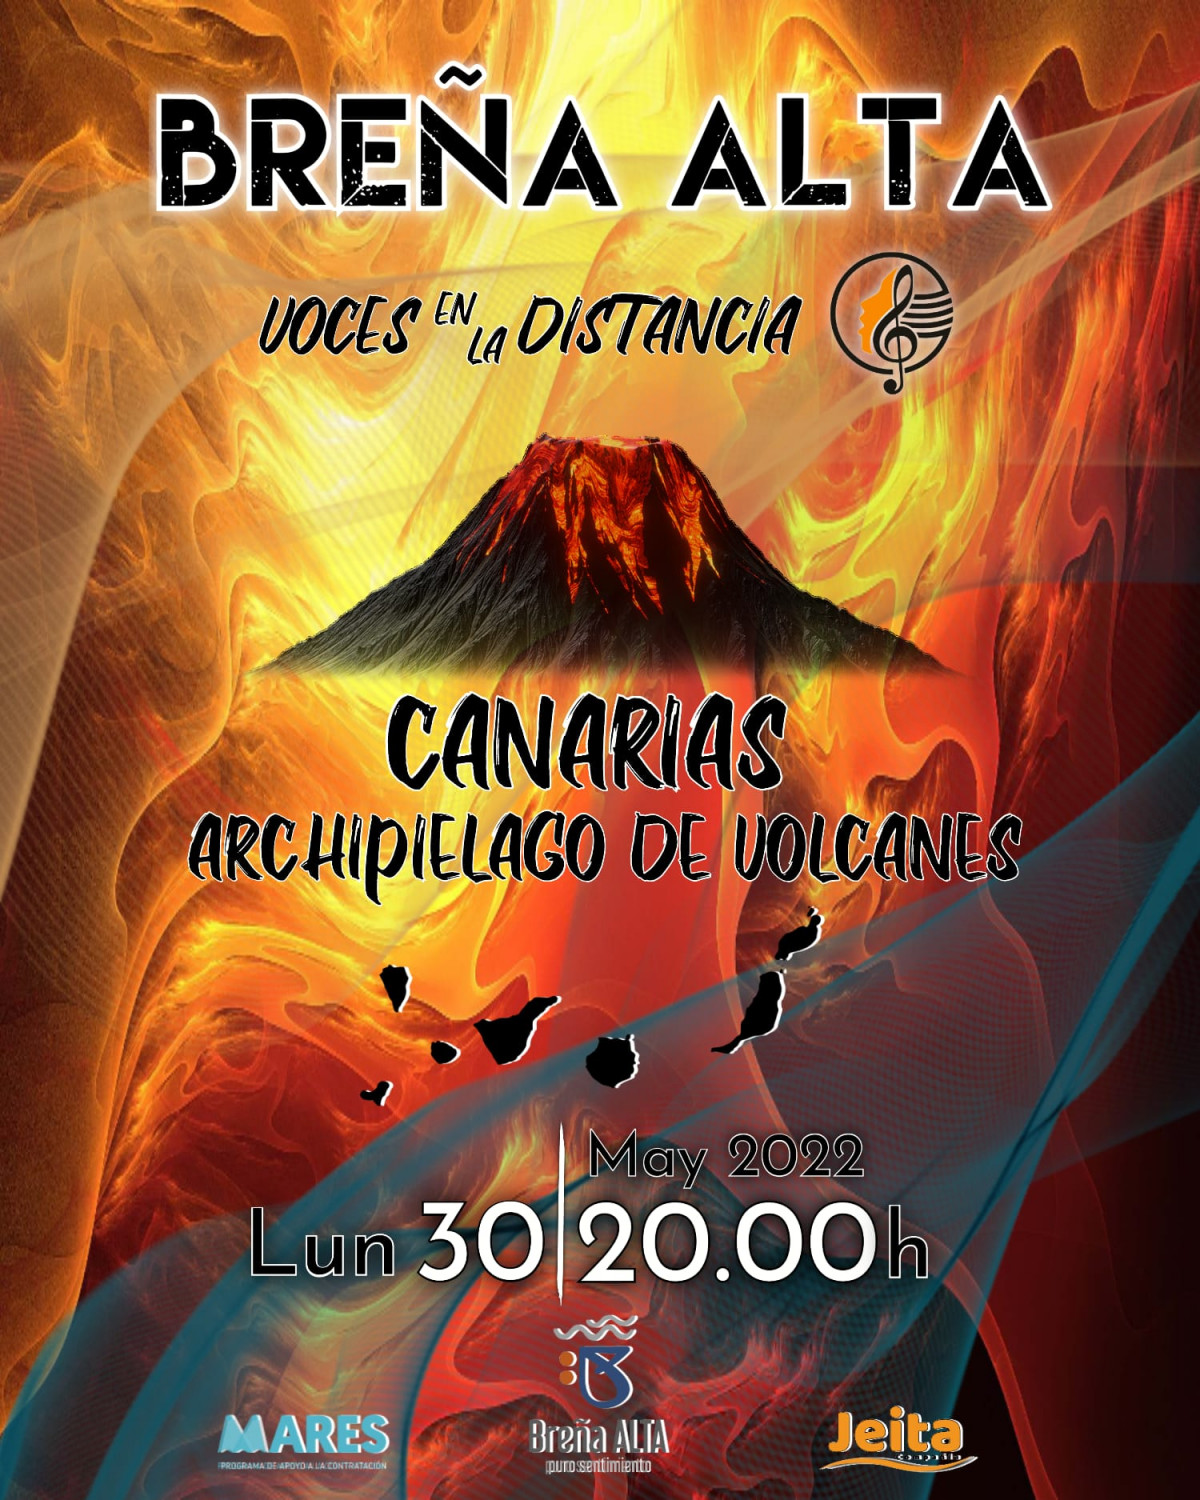 Du00eda de Canarias Breu00f1a Alta 2022 (2)